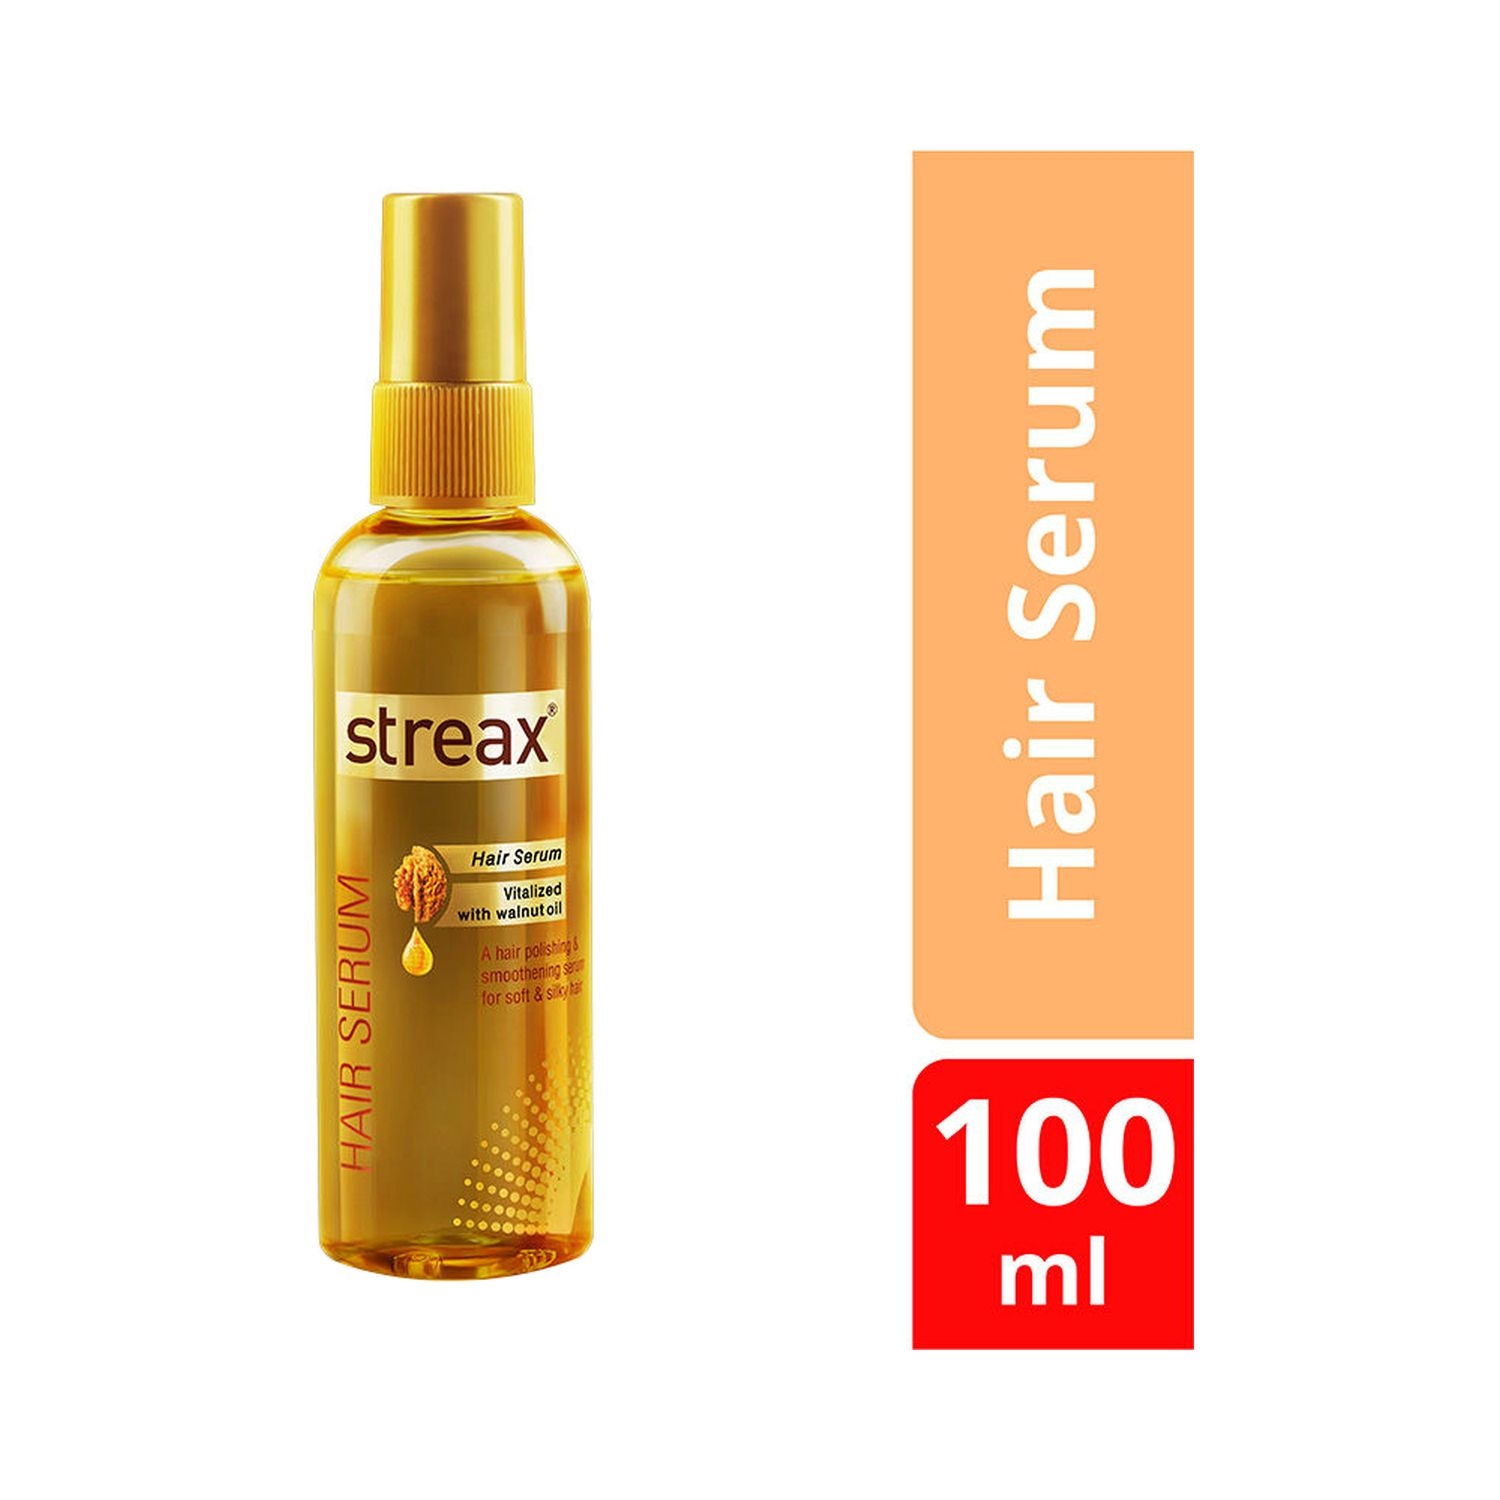 Streax | Streax Hair Serum Vitalised With Walnut Oil (100ml)